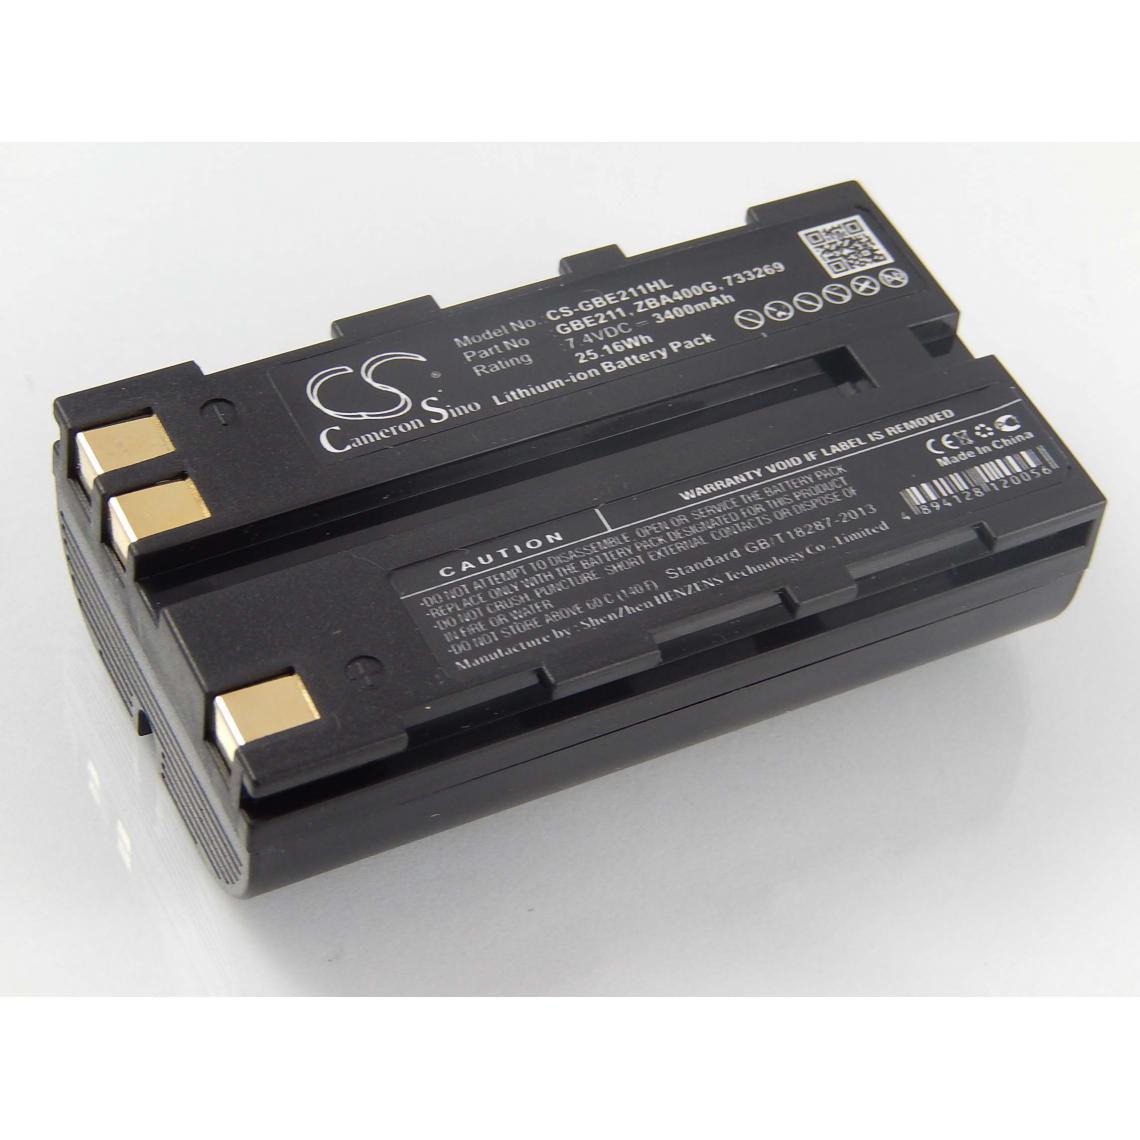 Vhbw - vhbw Batterie compatible avec Leica Viva TS11, TS12, TS15 dispositif de mesure laser, outil de mesure (3400mAh, 7,4V, Li-ion) - Piles rechargeables